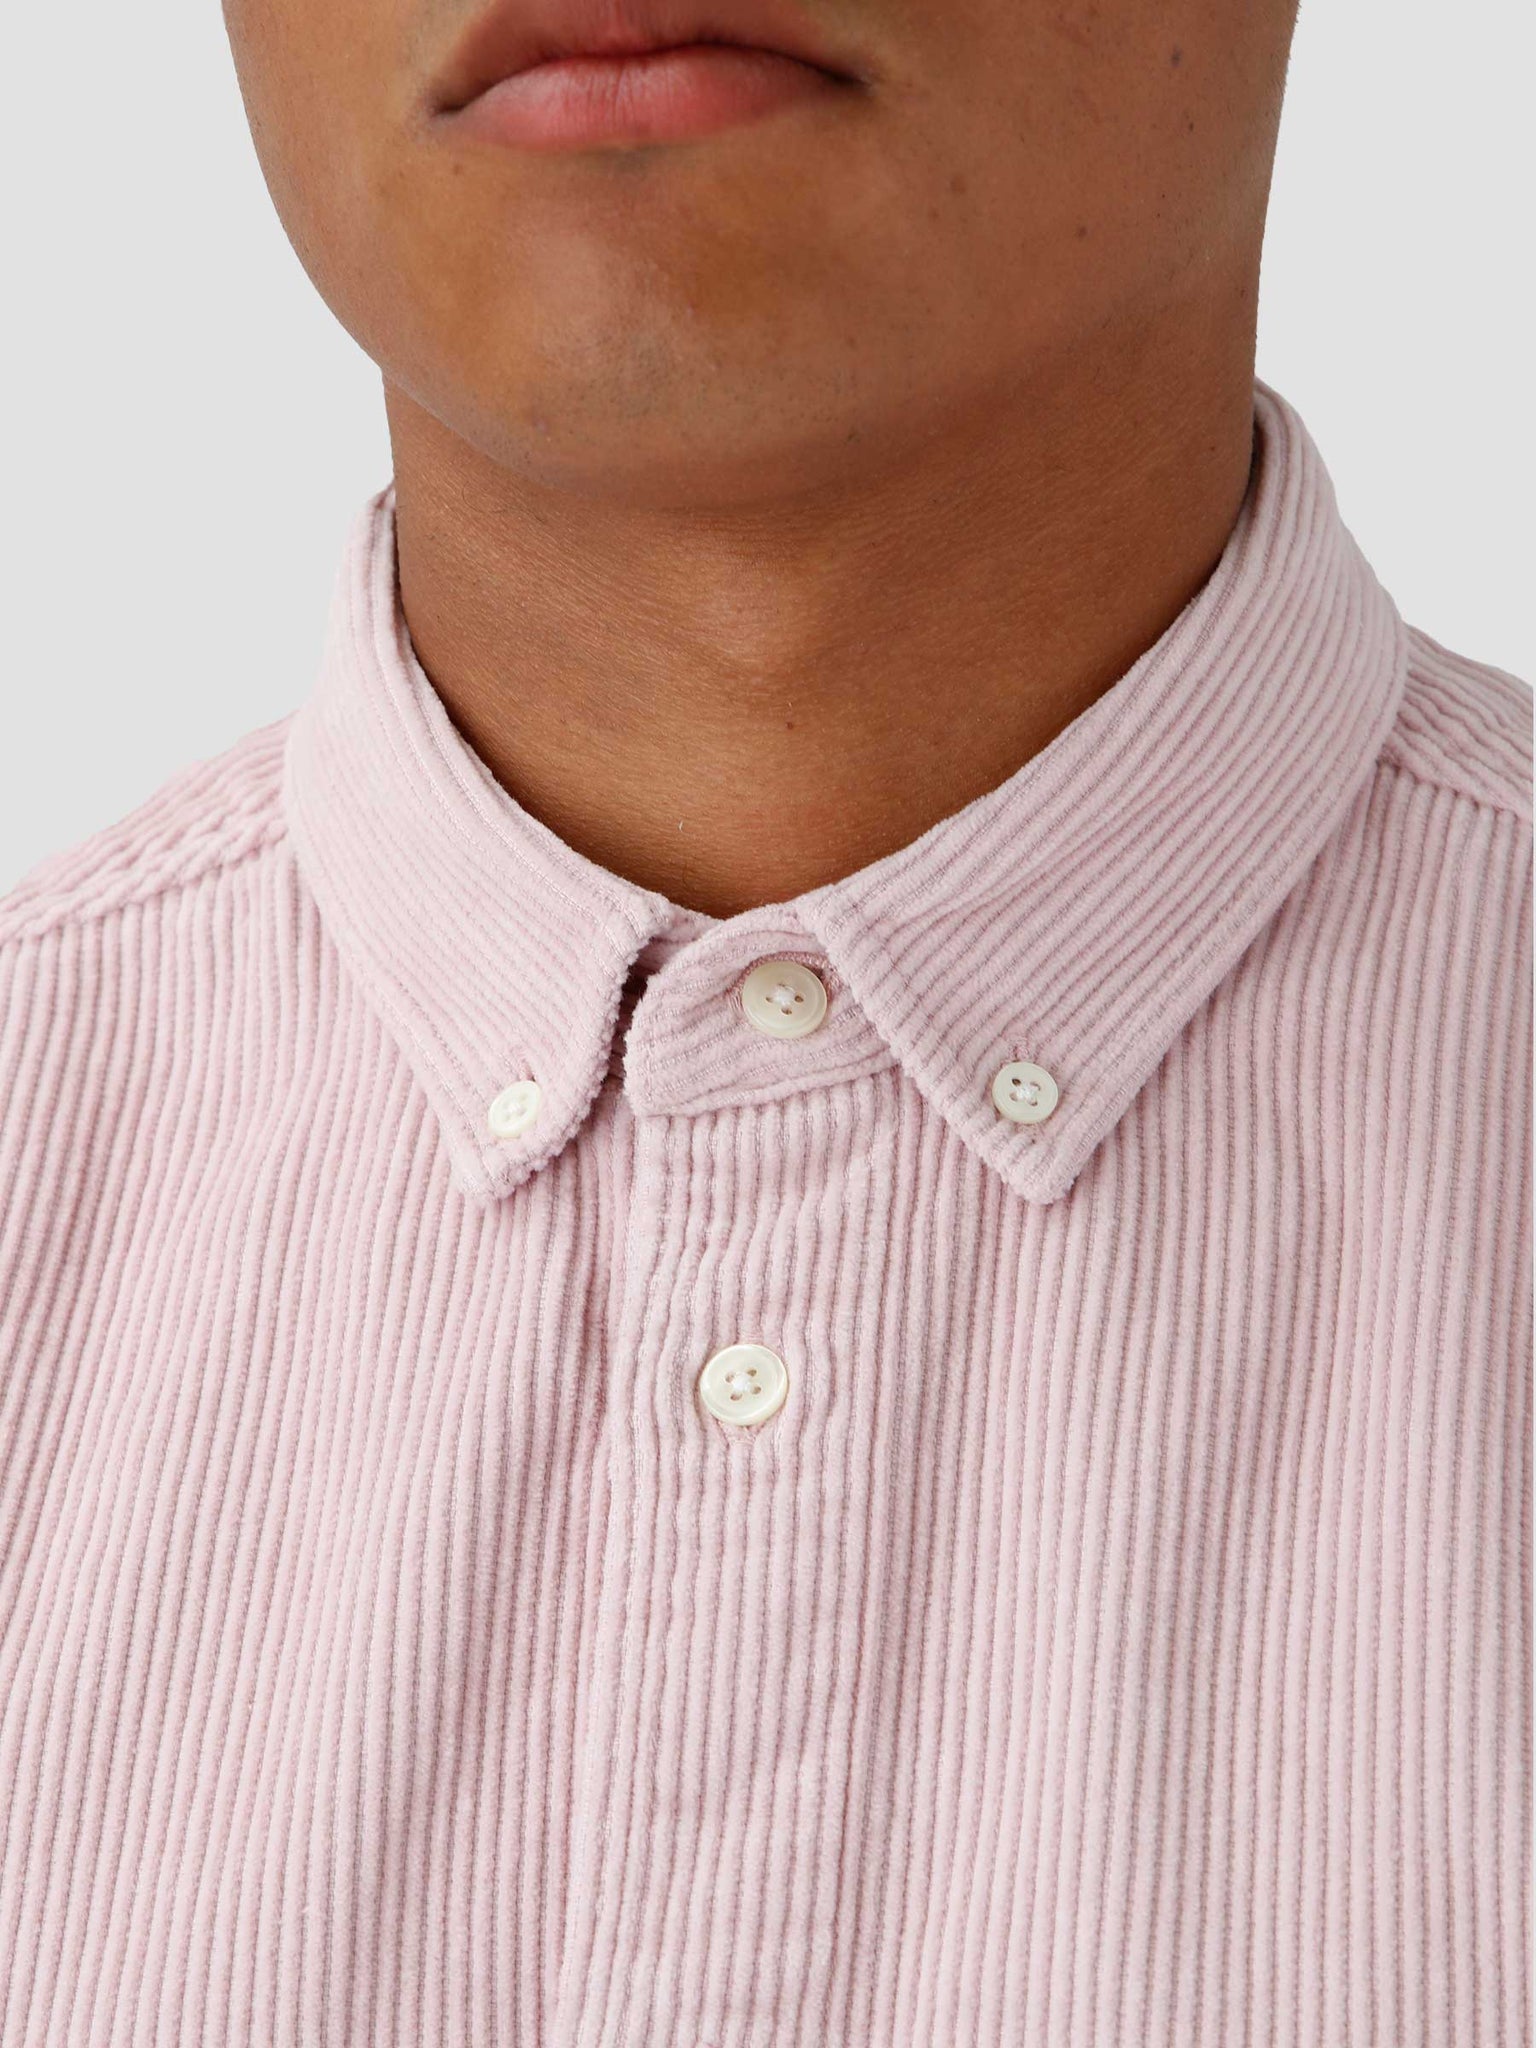 QB41 Cord Shirt Pale Mauve